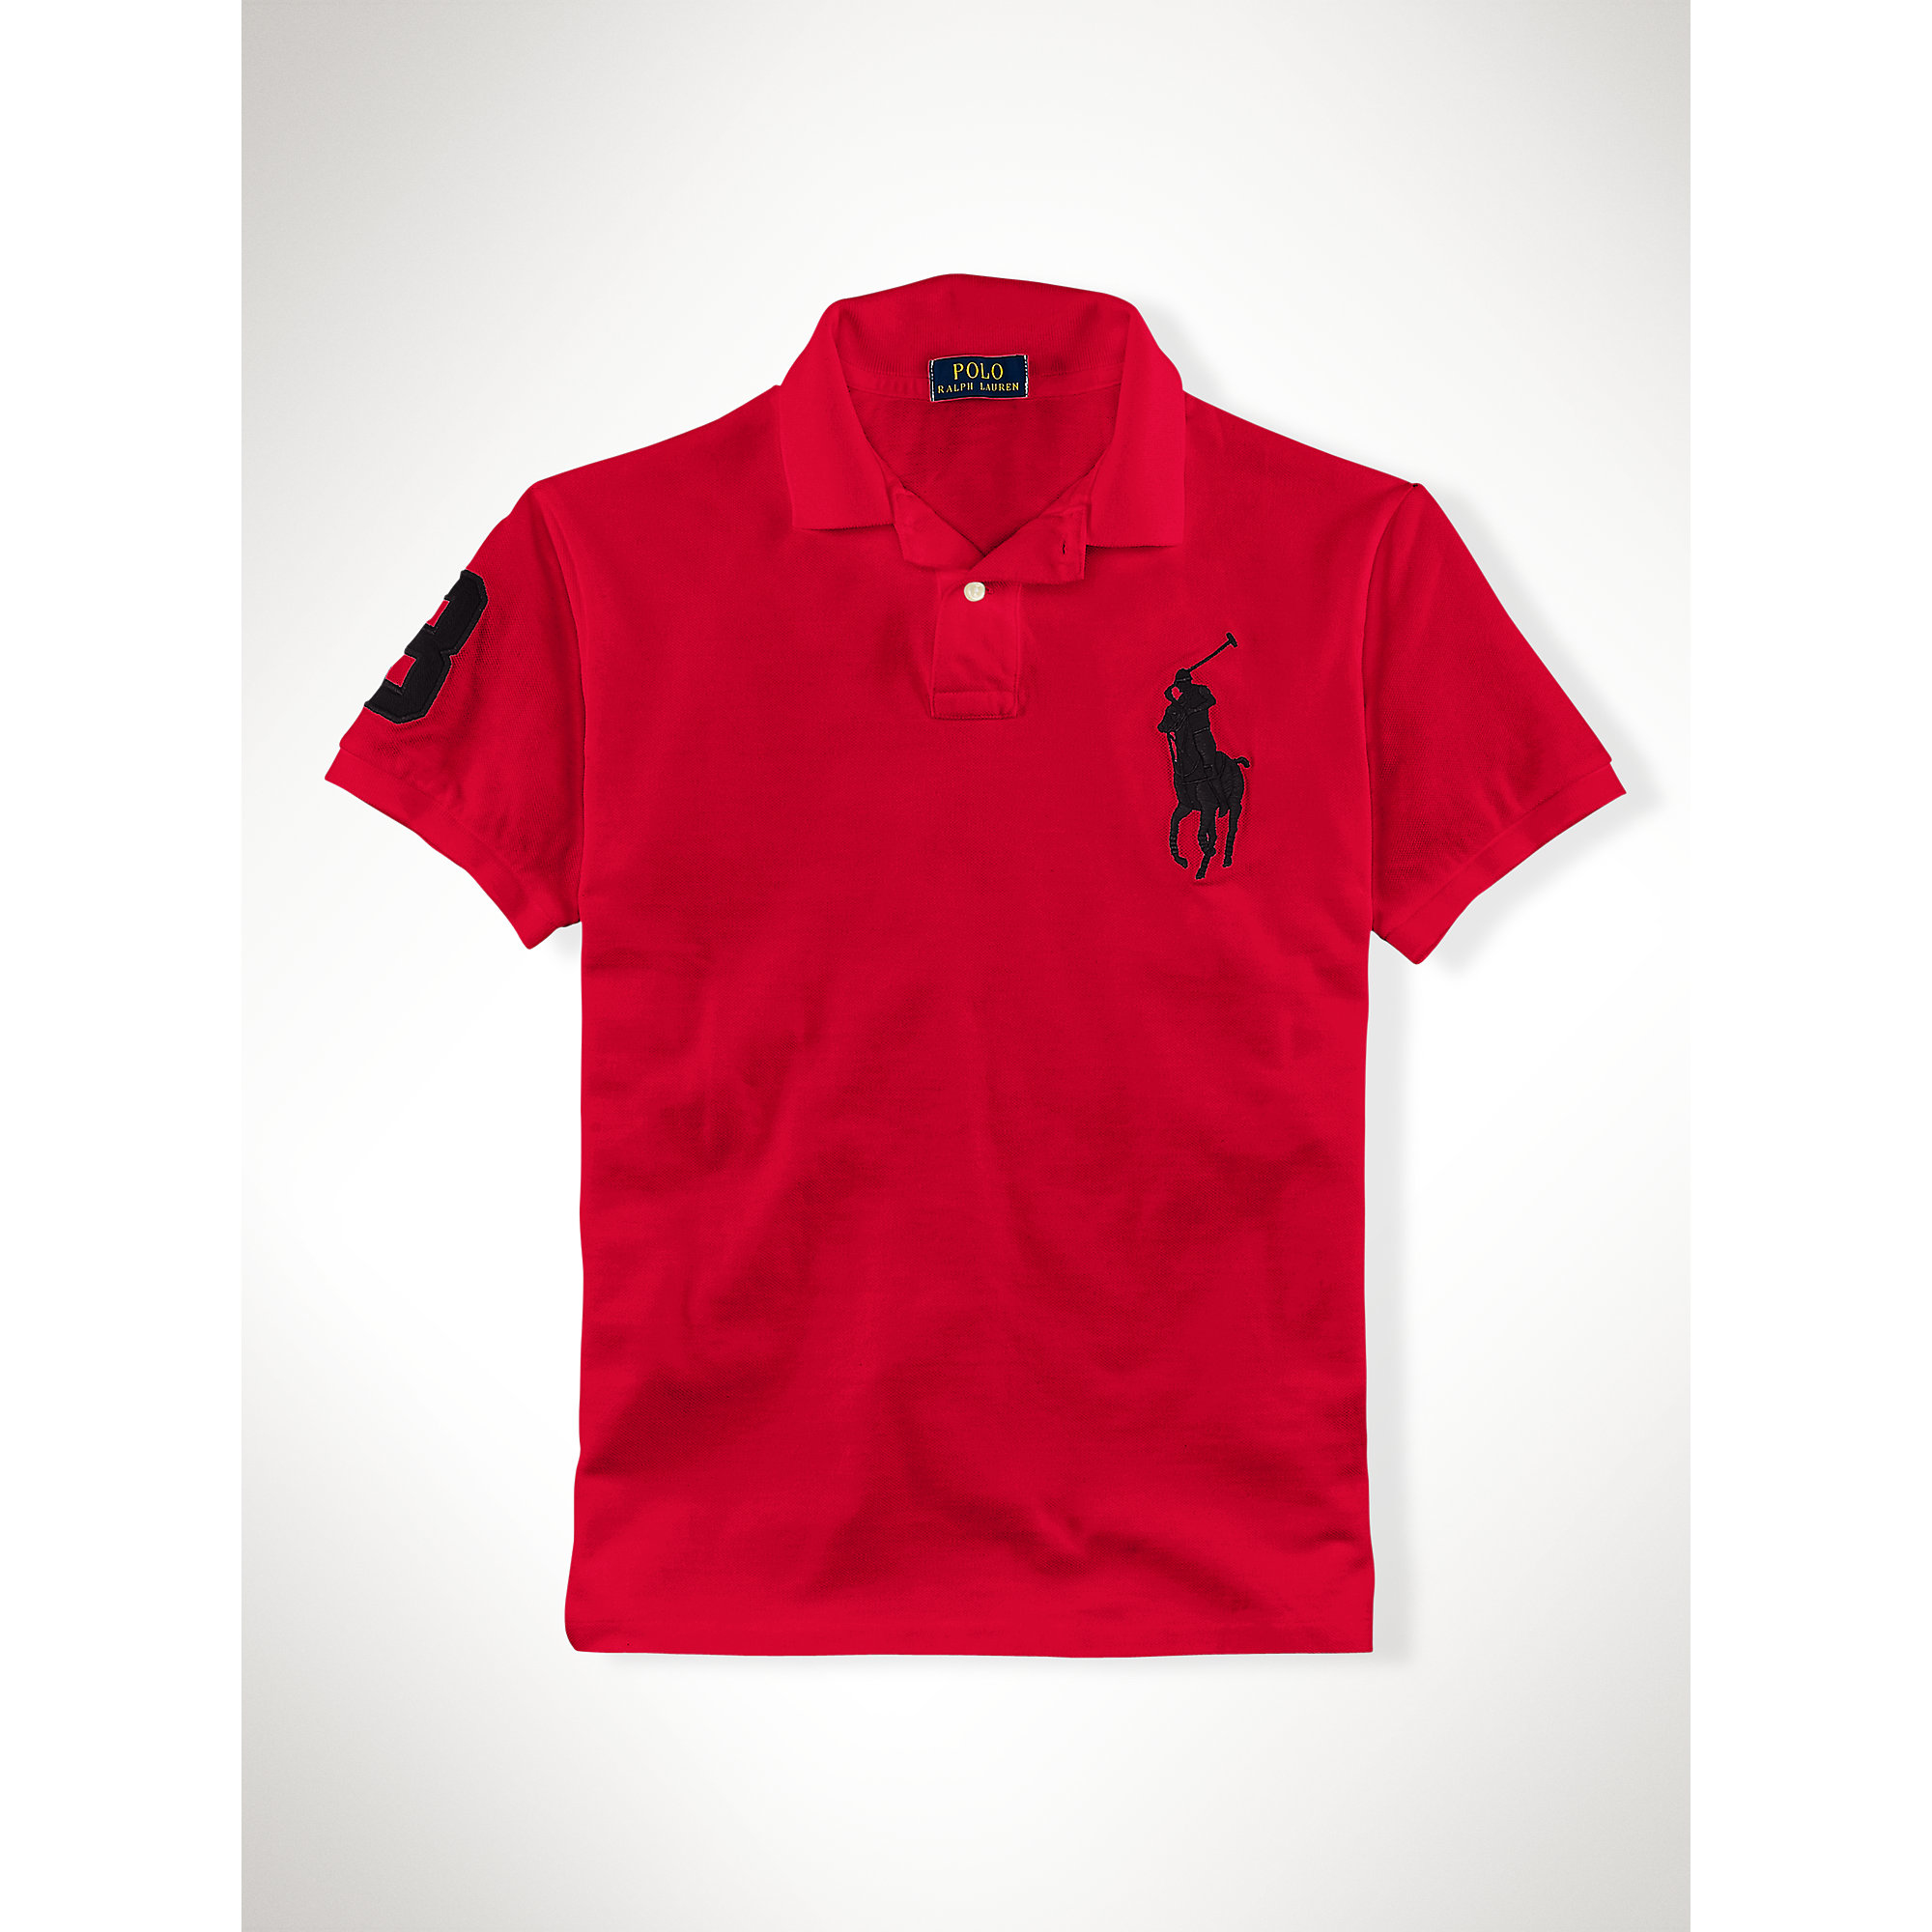 black and red ralph lauren shirt